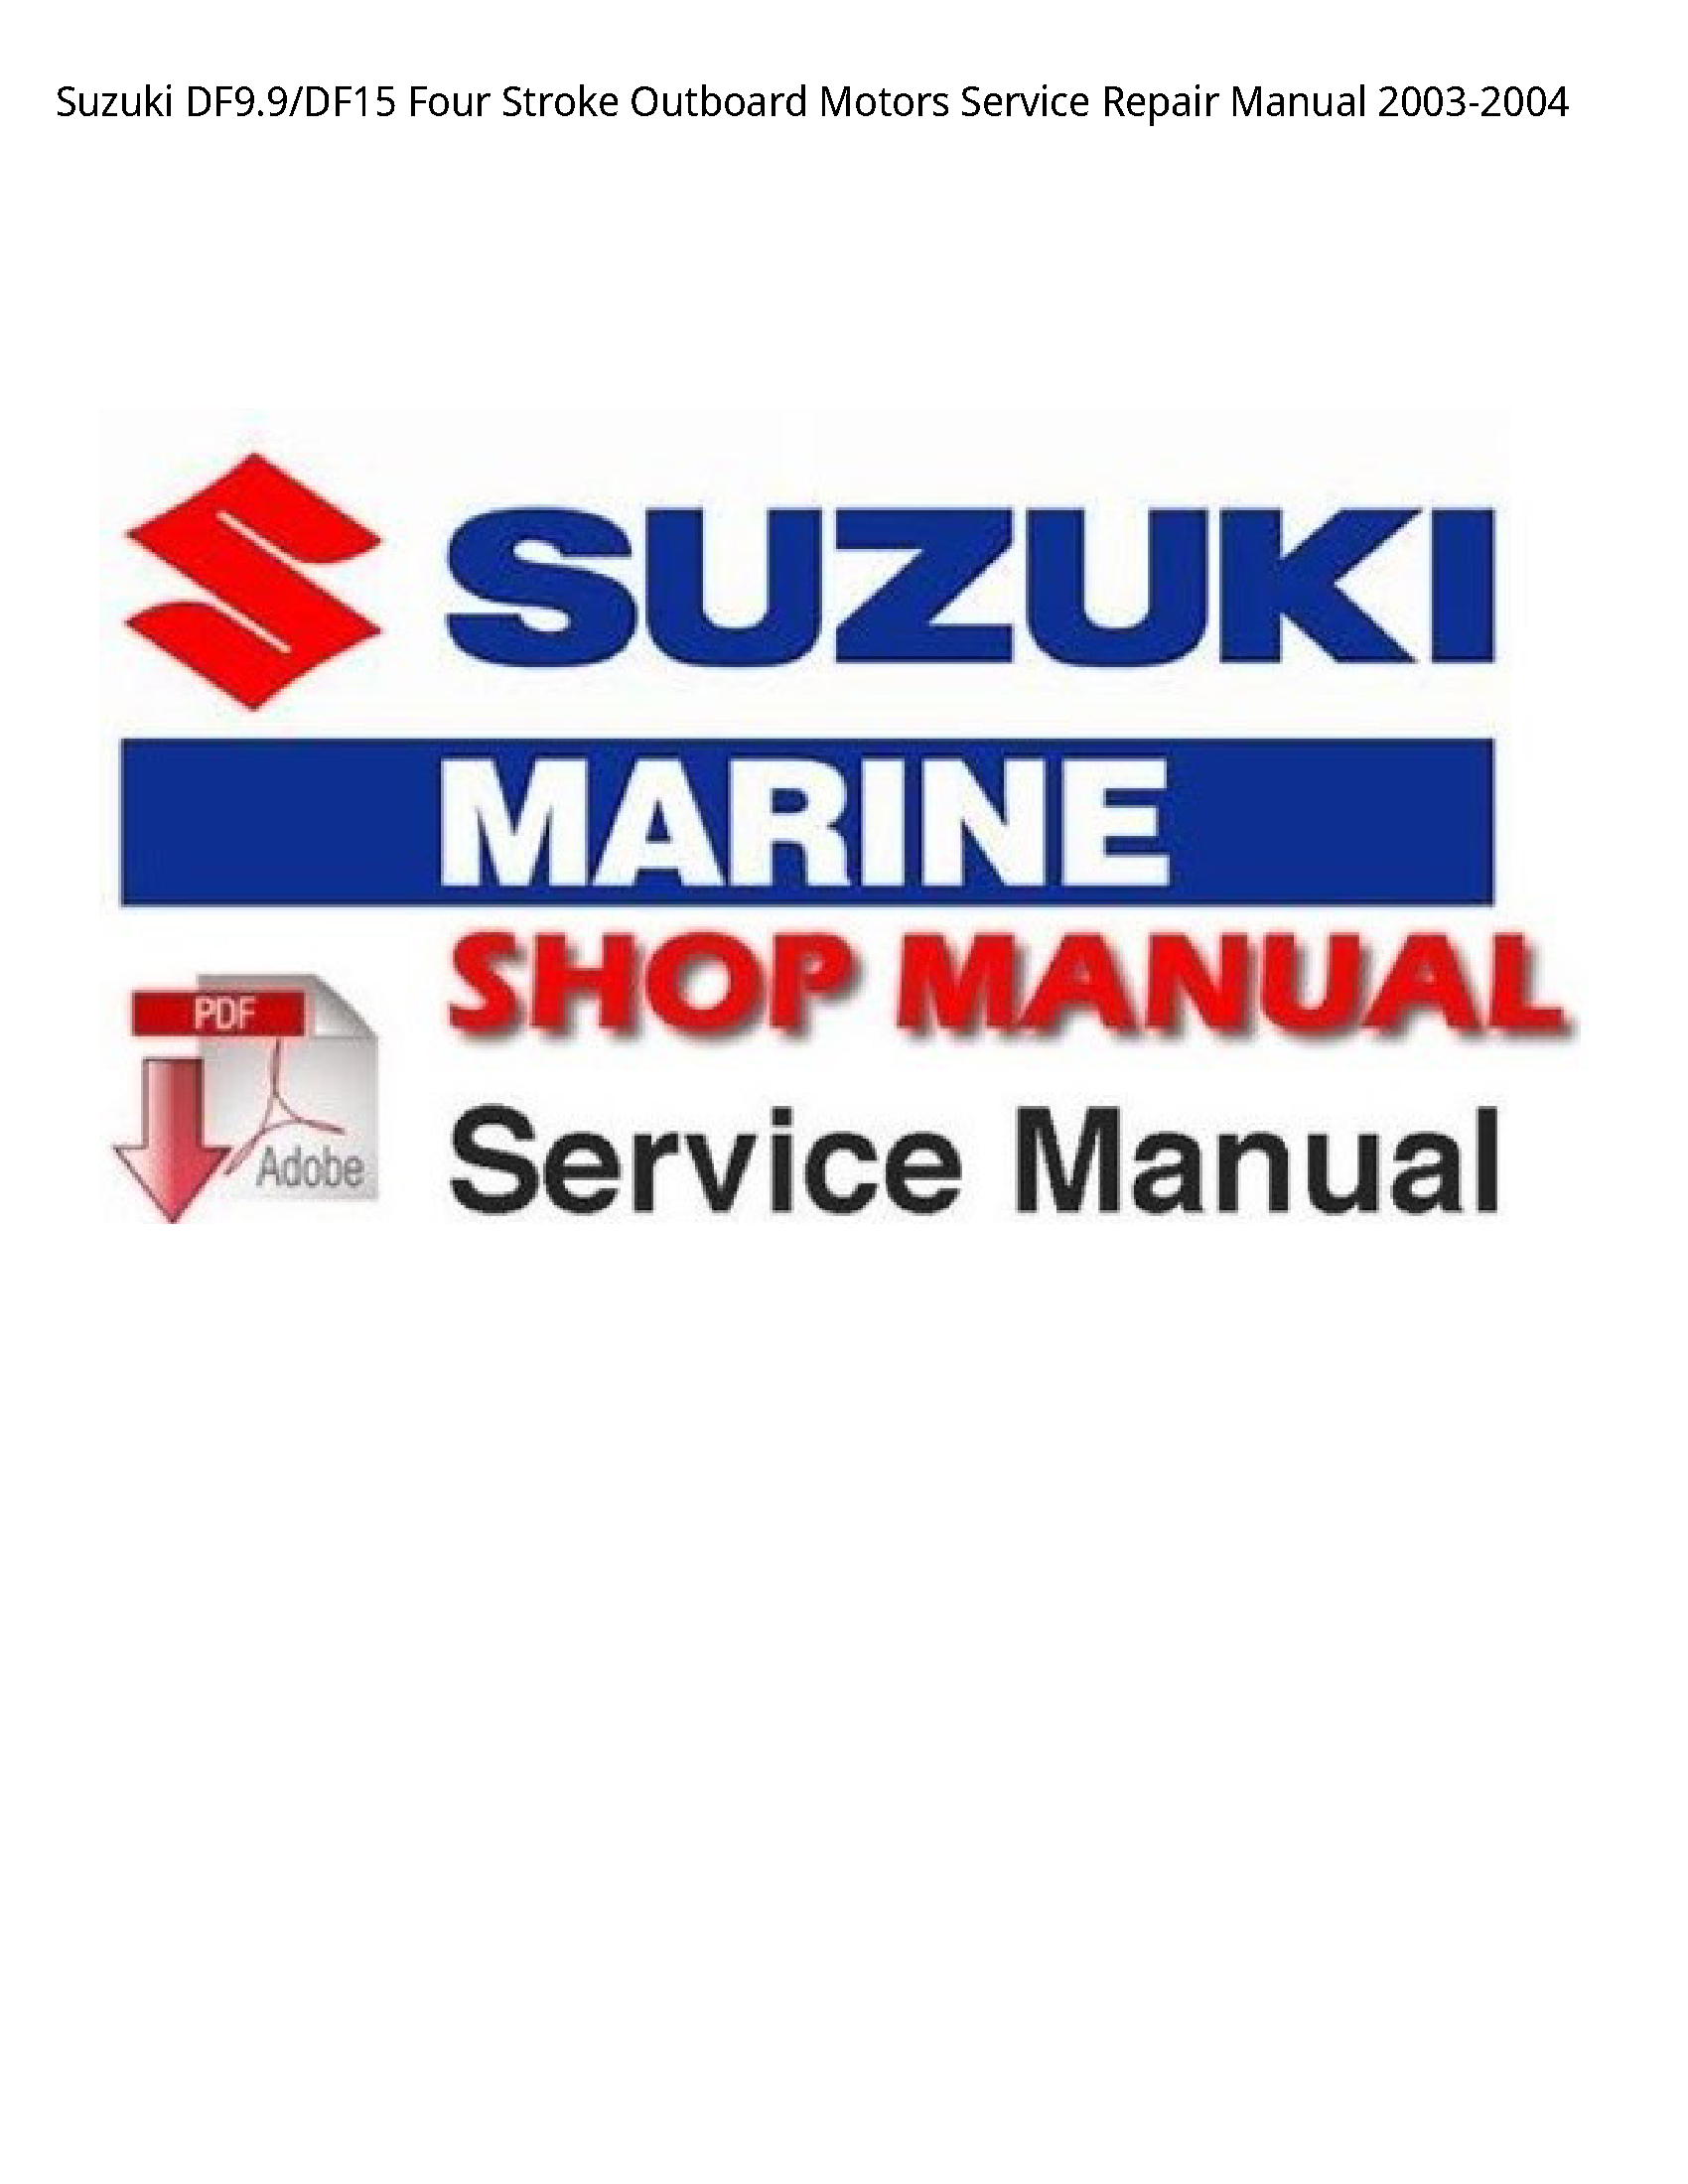 Suzuki DF9.9 Four Stroke Outboard Motors manual